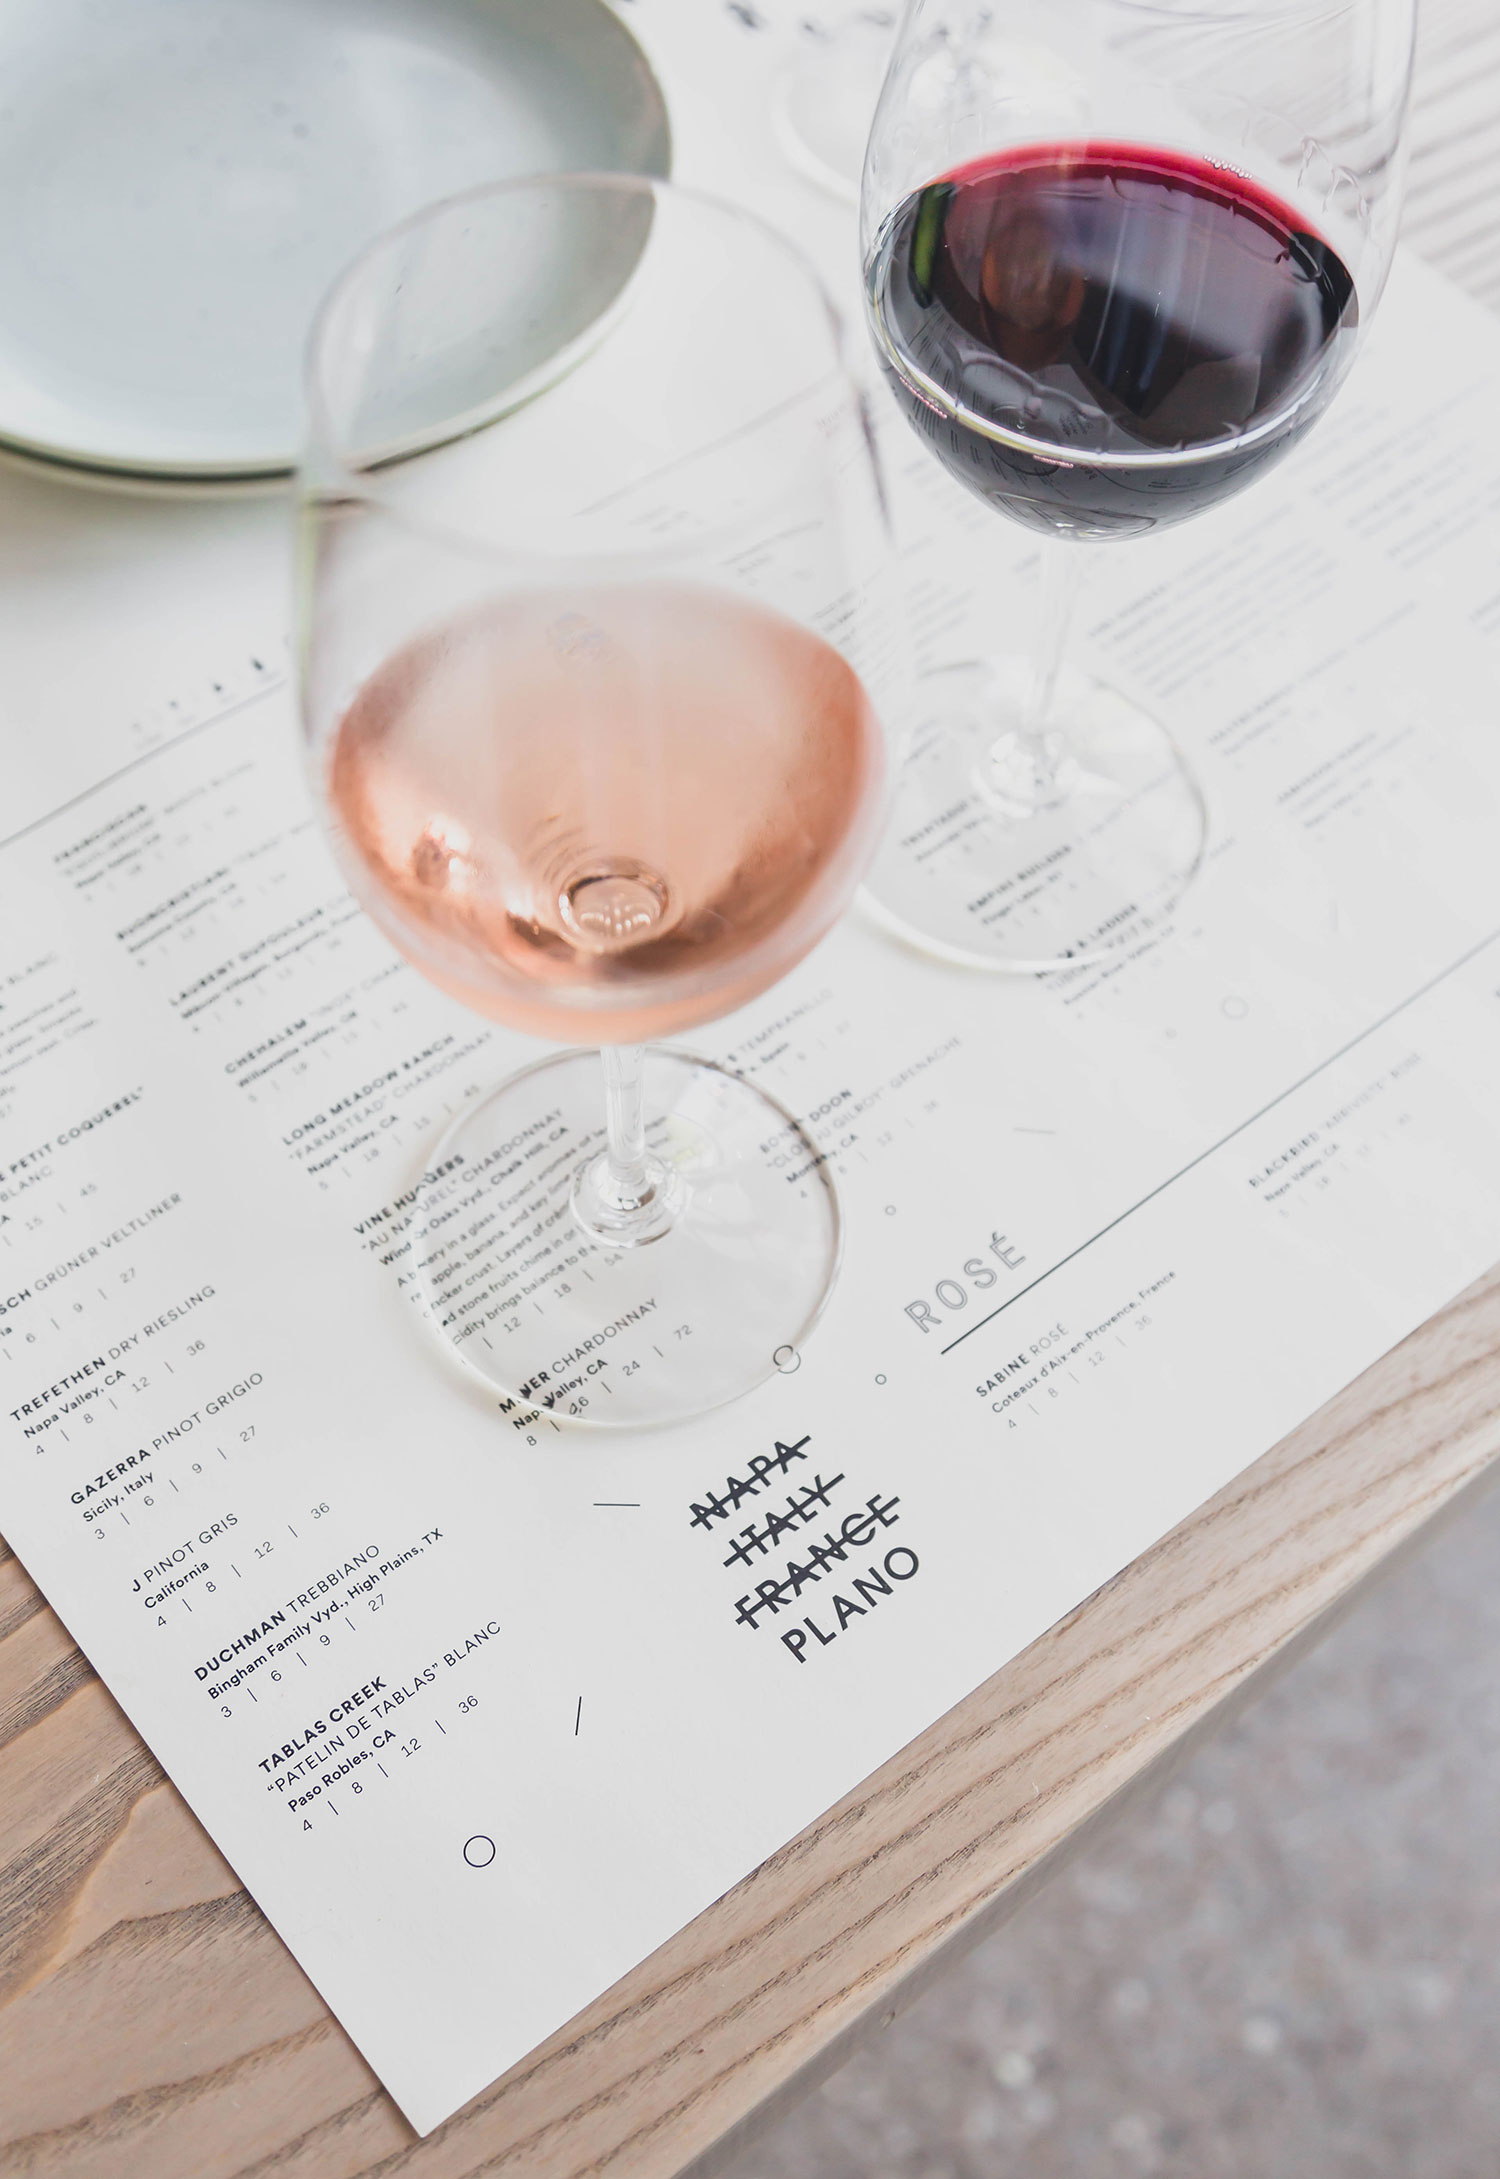 sixty-vines-restaurant-wine-bar-plano-magazine-13